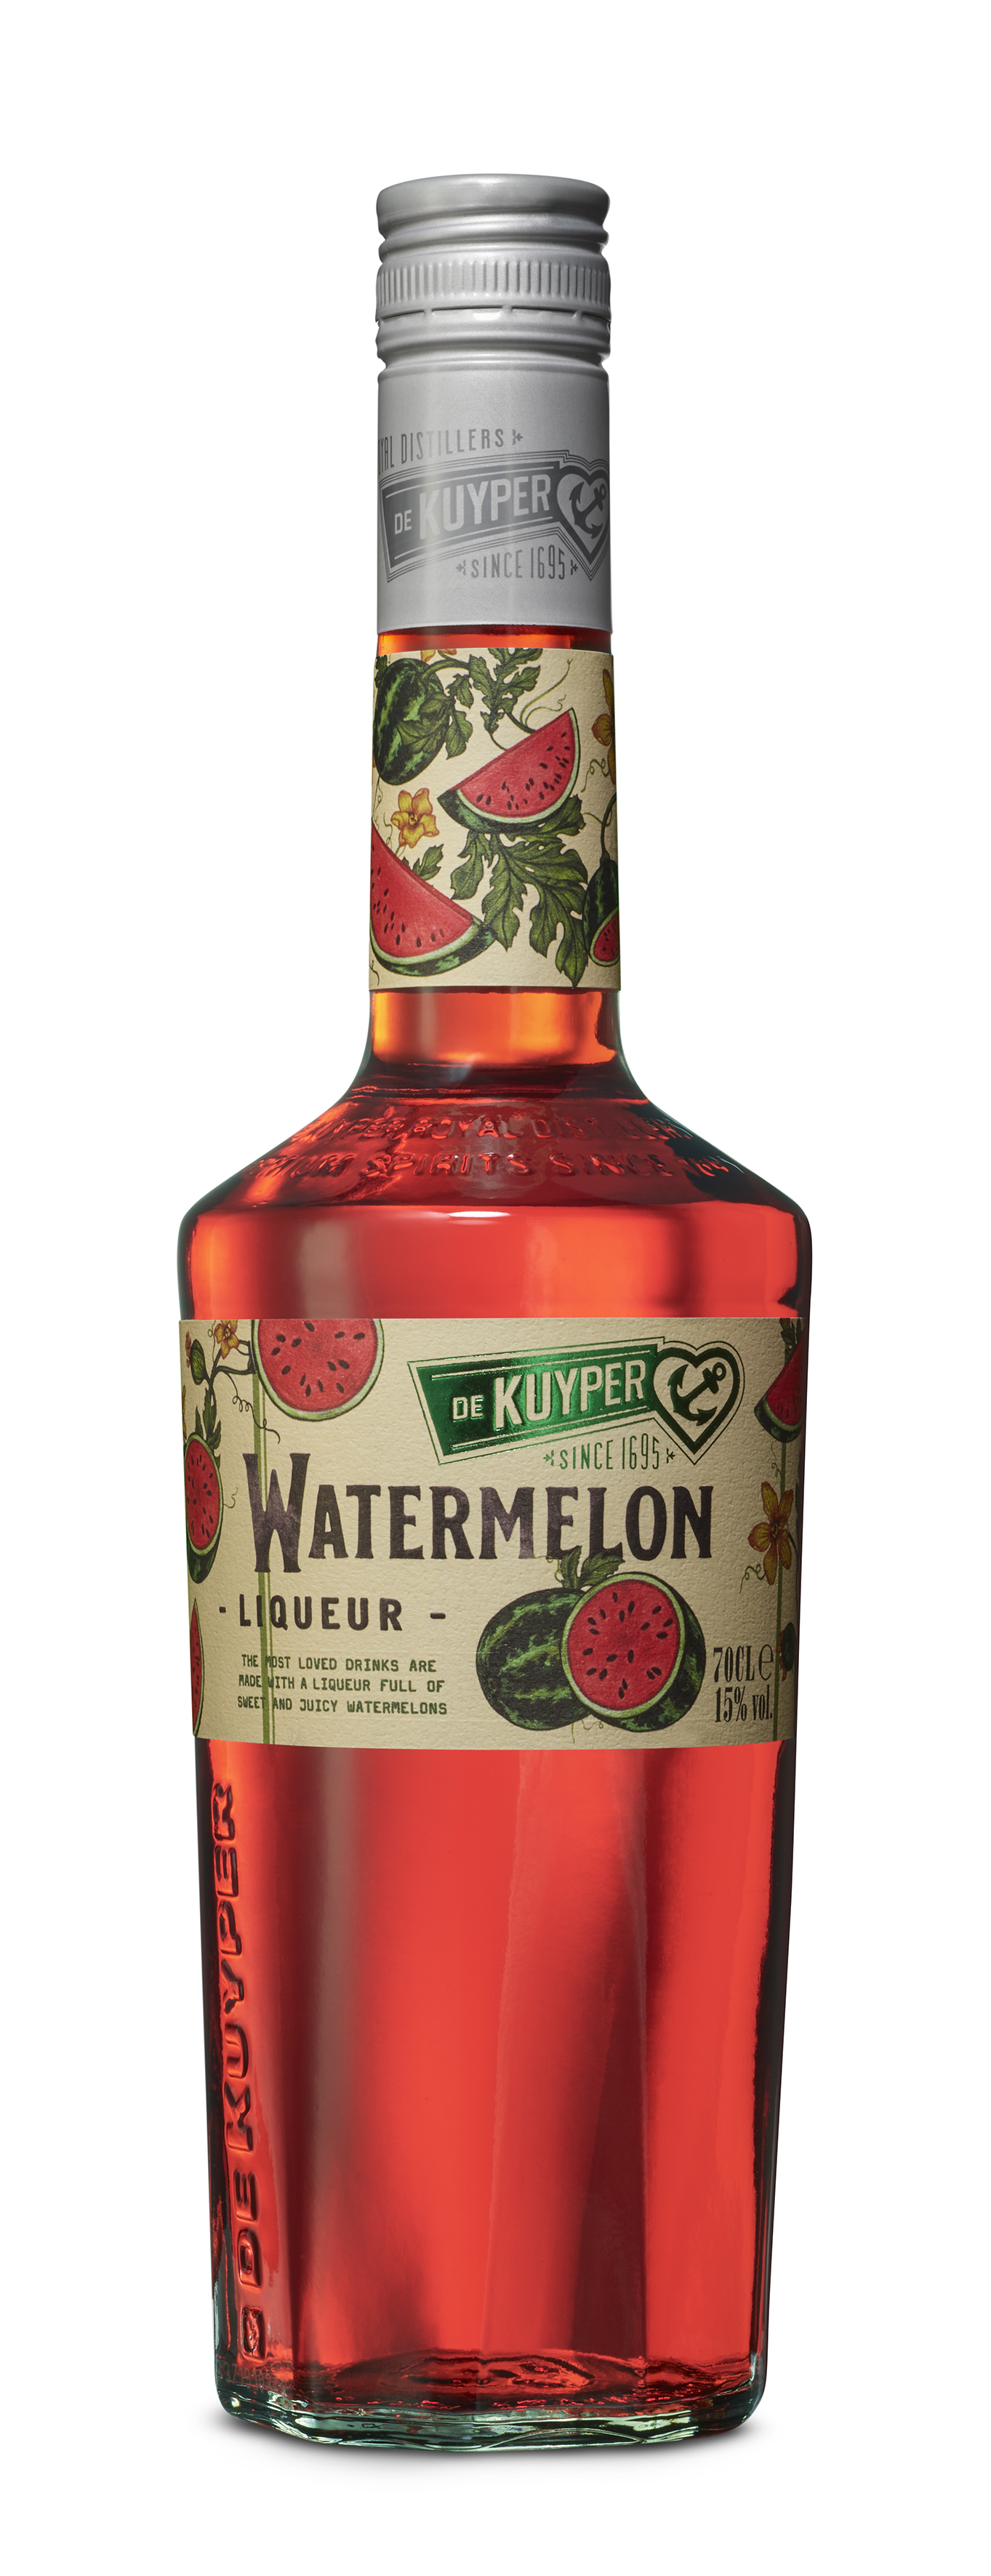 De Kuyper Watermelon - Wassermelonen Likör 15%vol. 0,7l